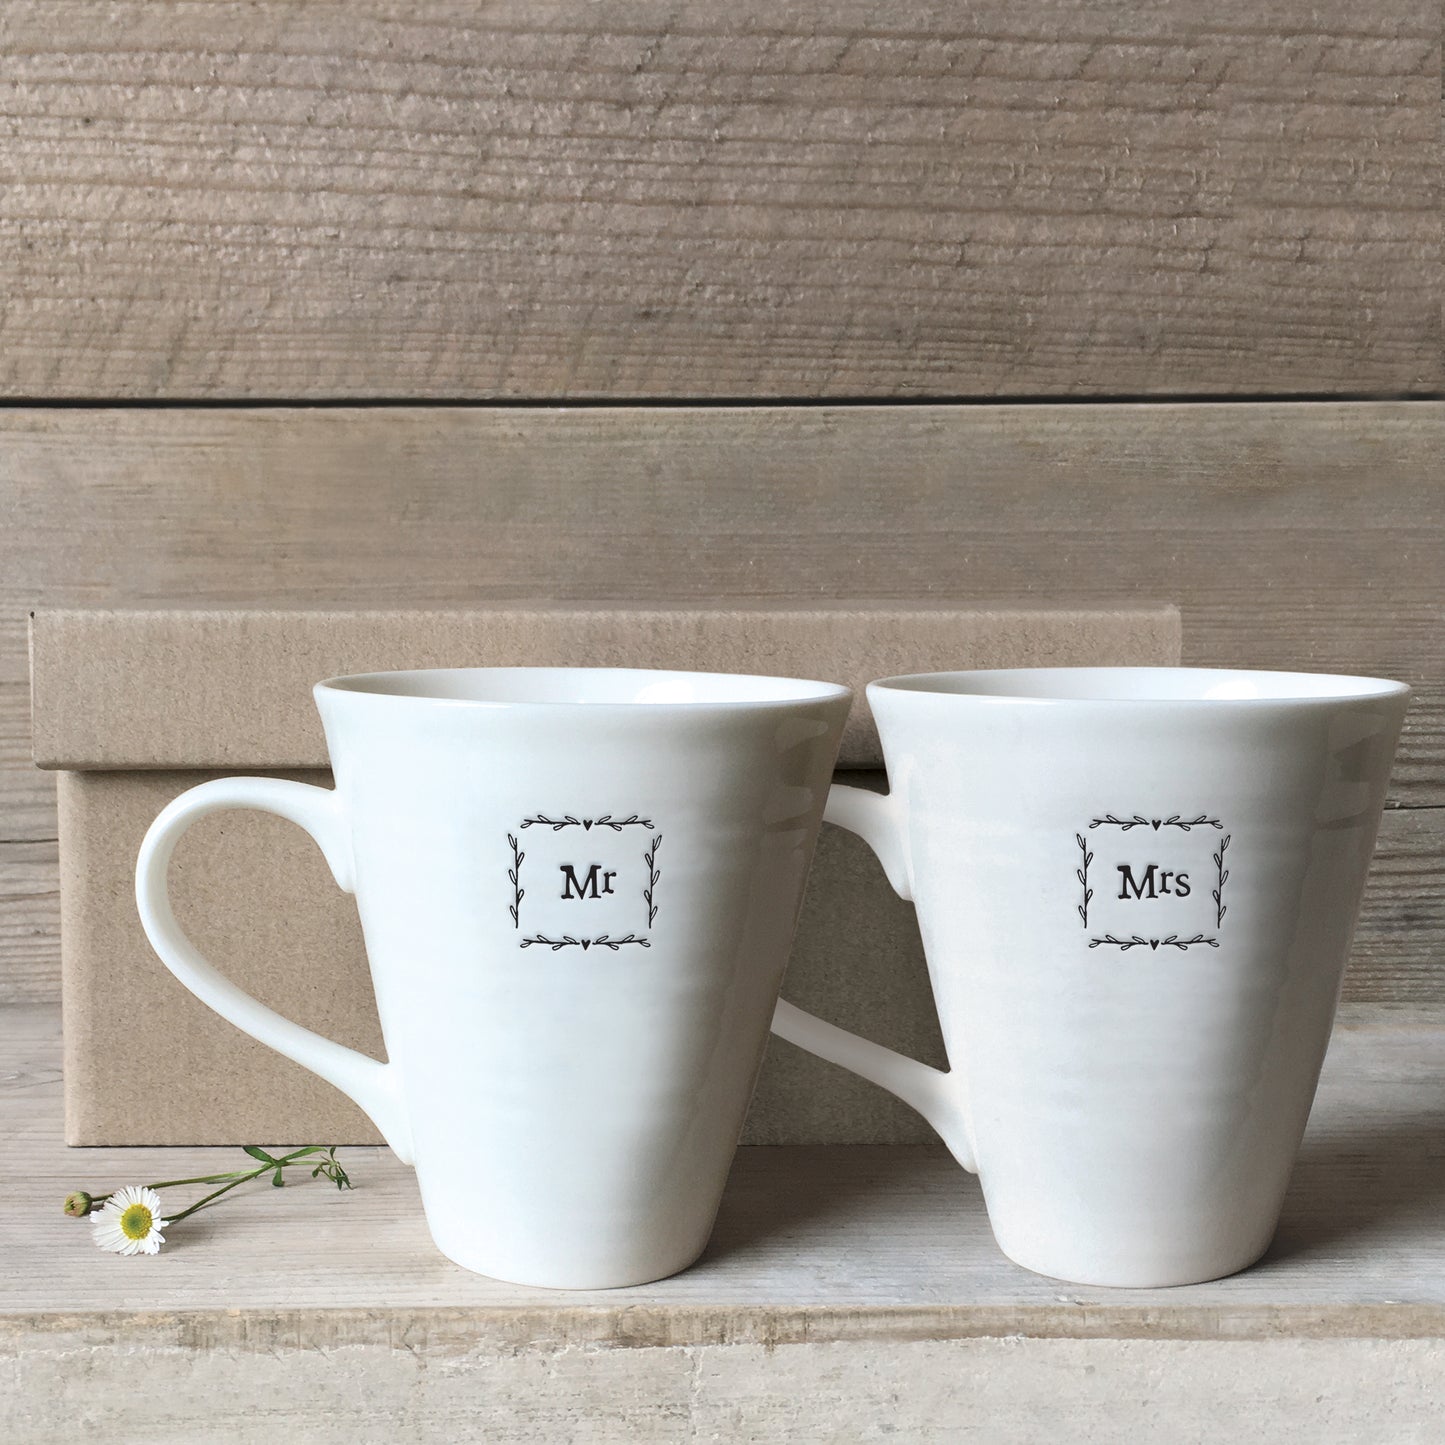 East Of India Mr & Mrs Porcelain Mug Set In A Gift Box